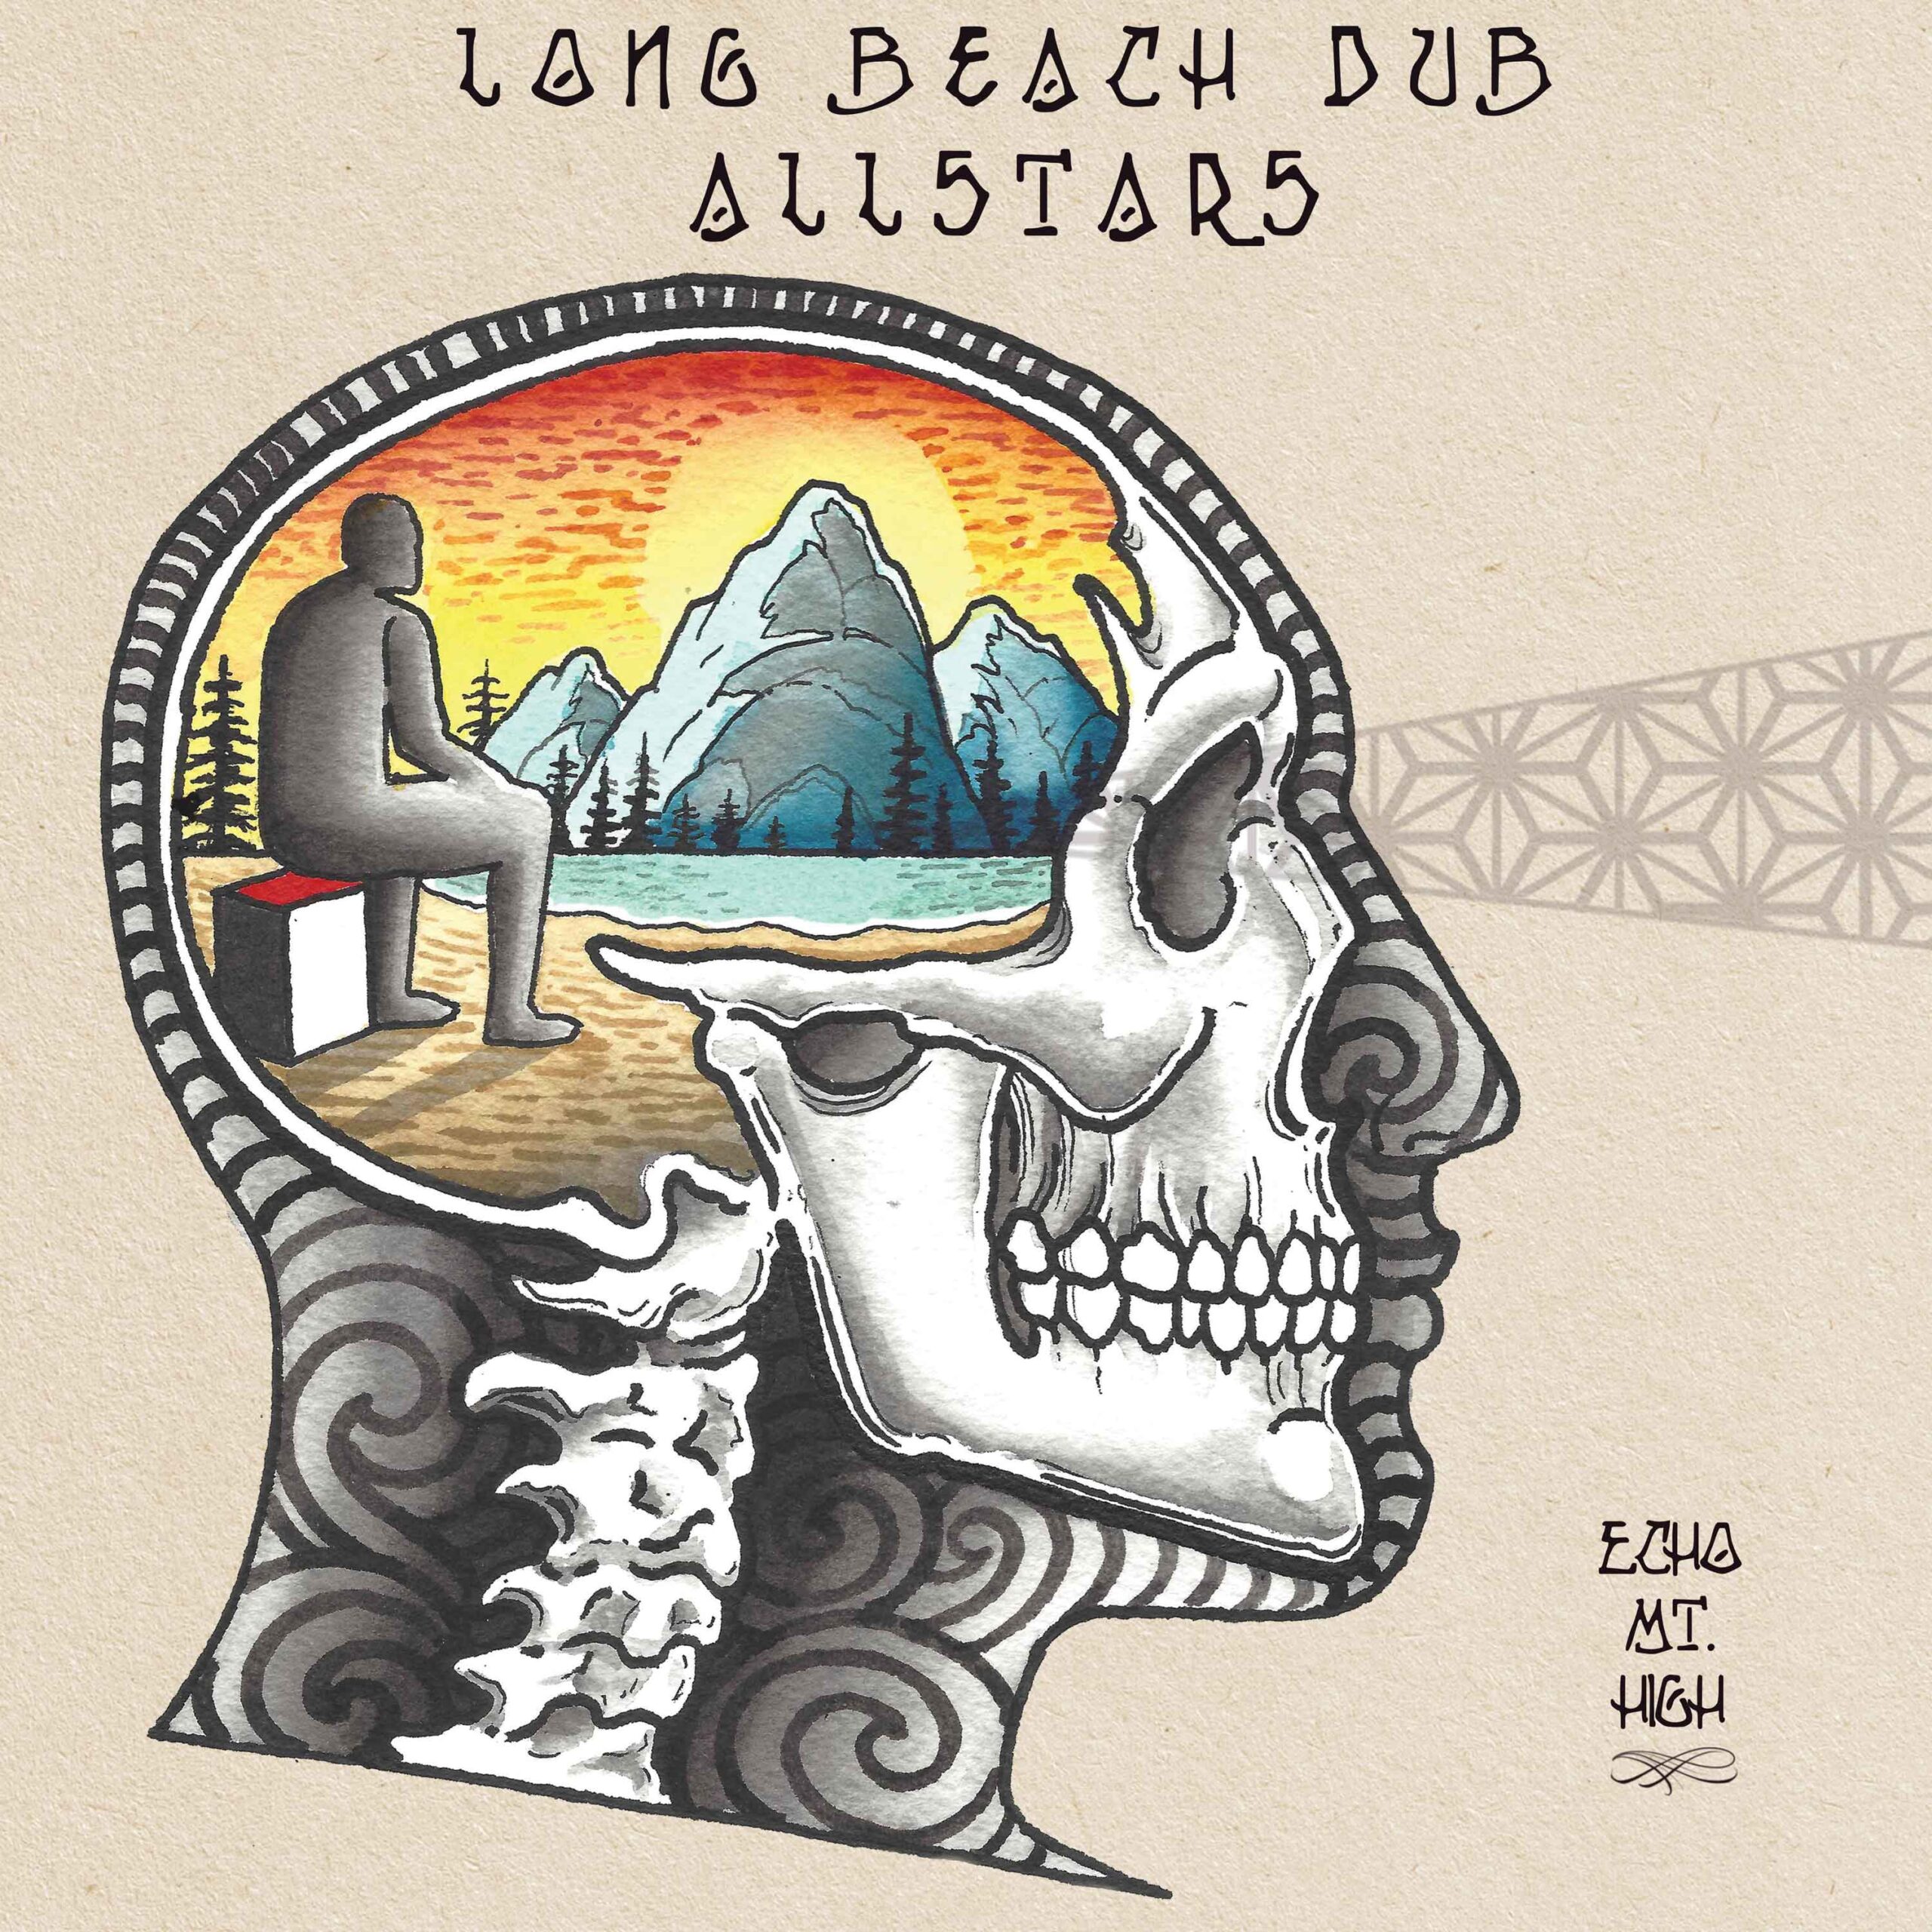 Long Beach Dub Allstars Release New Album 